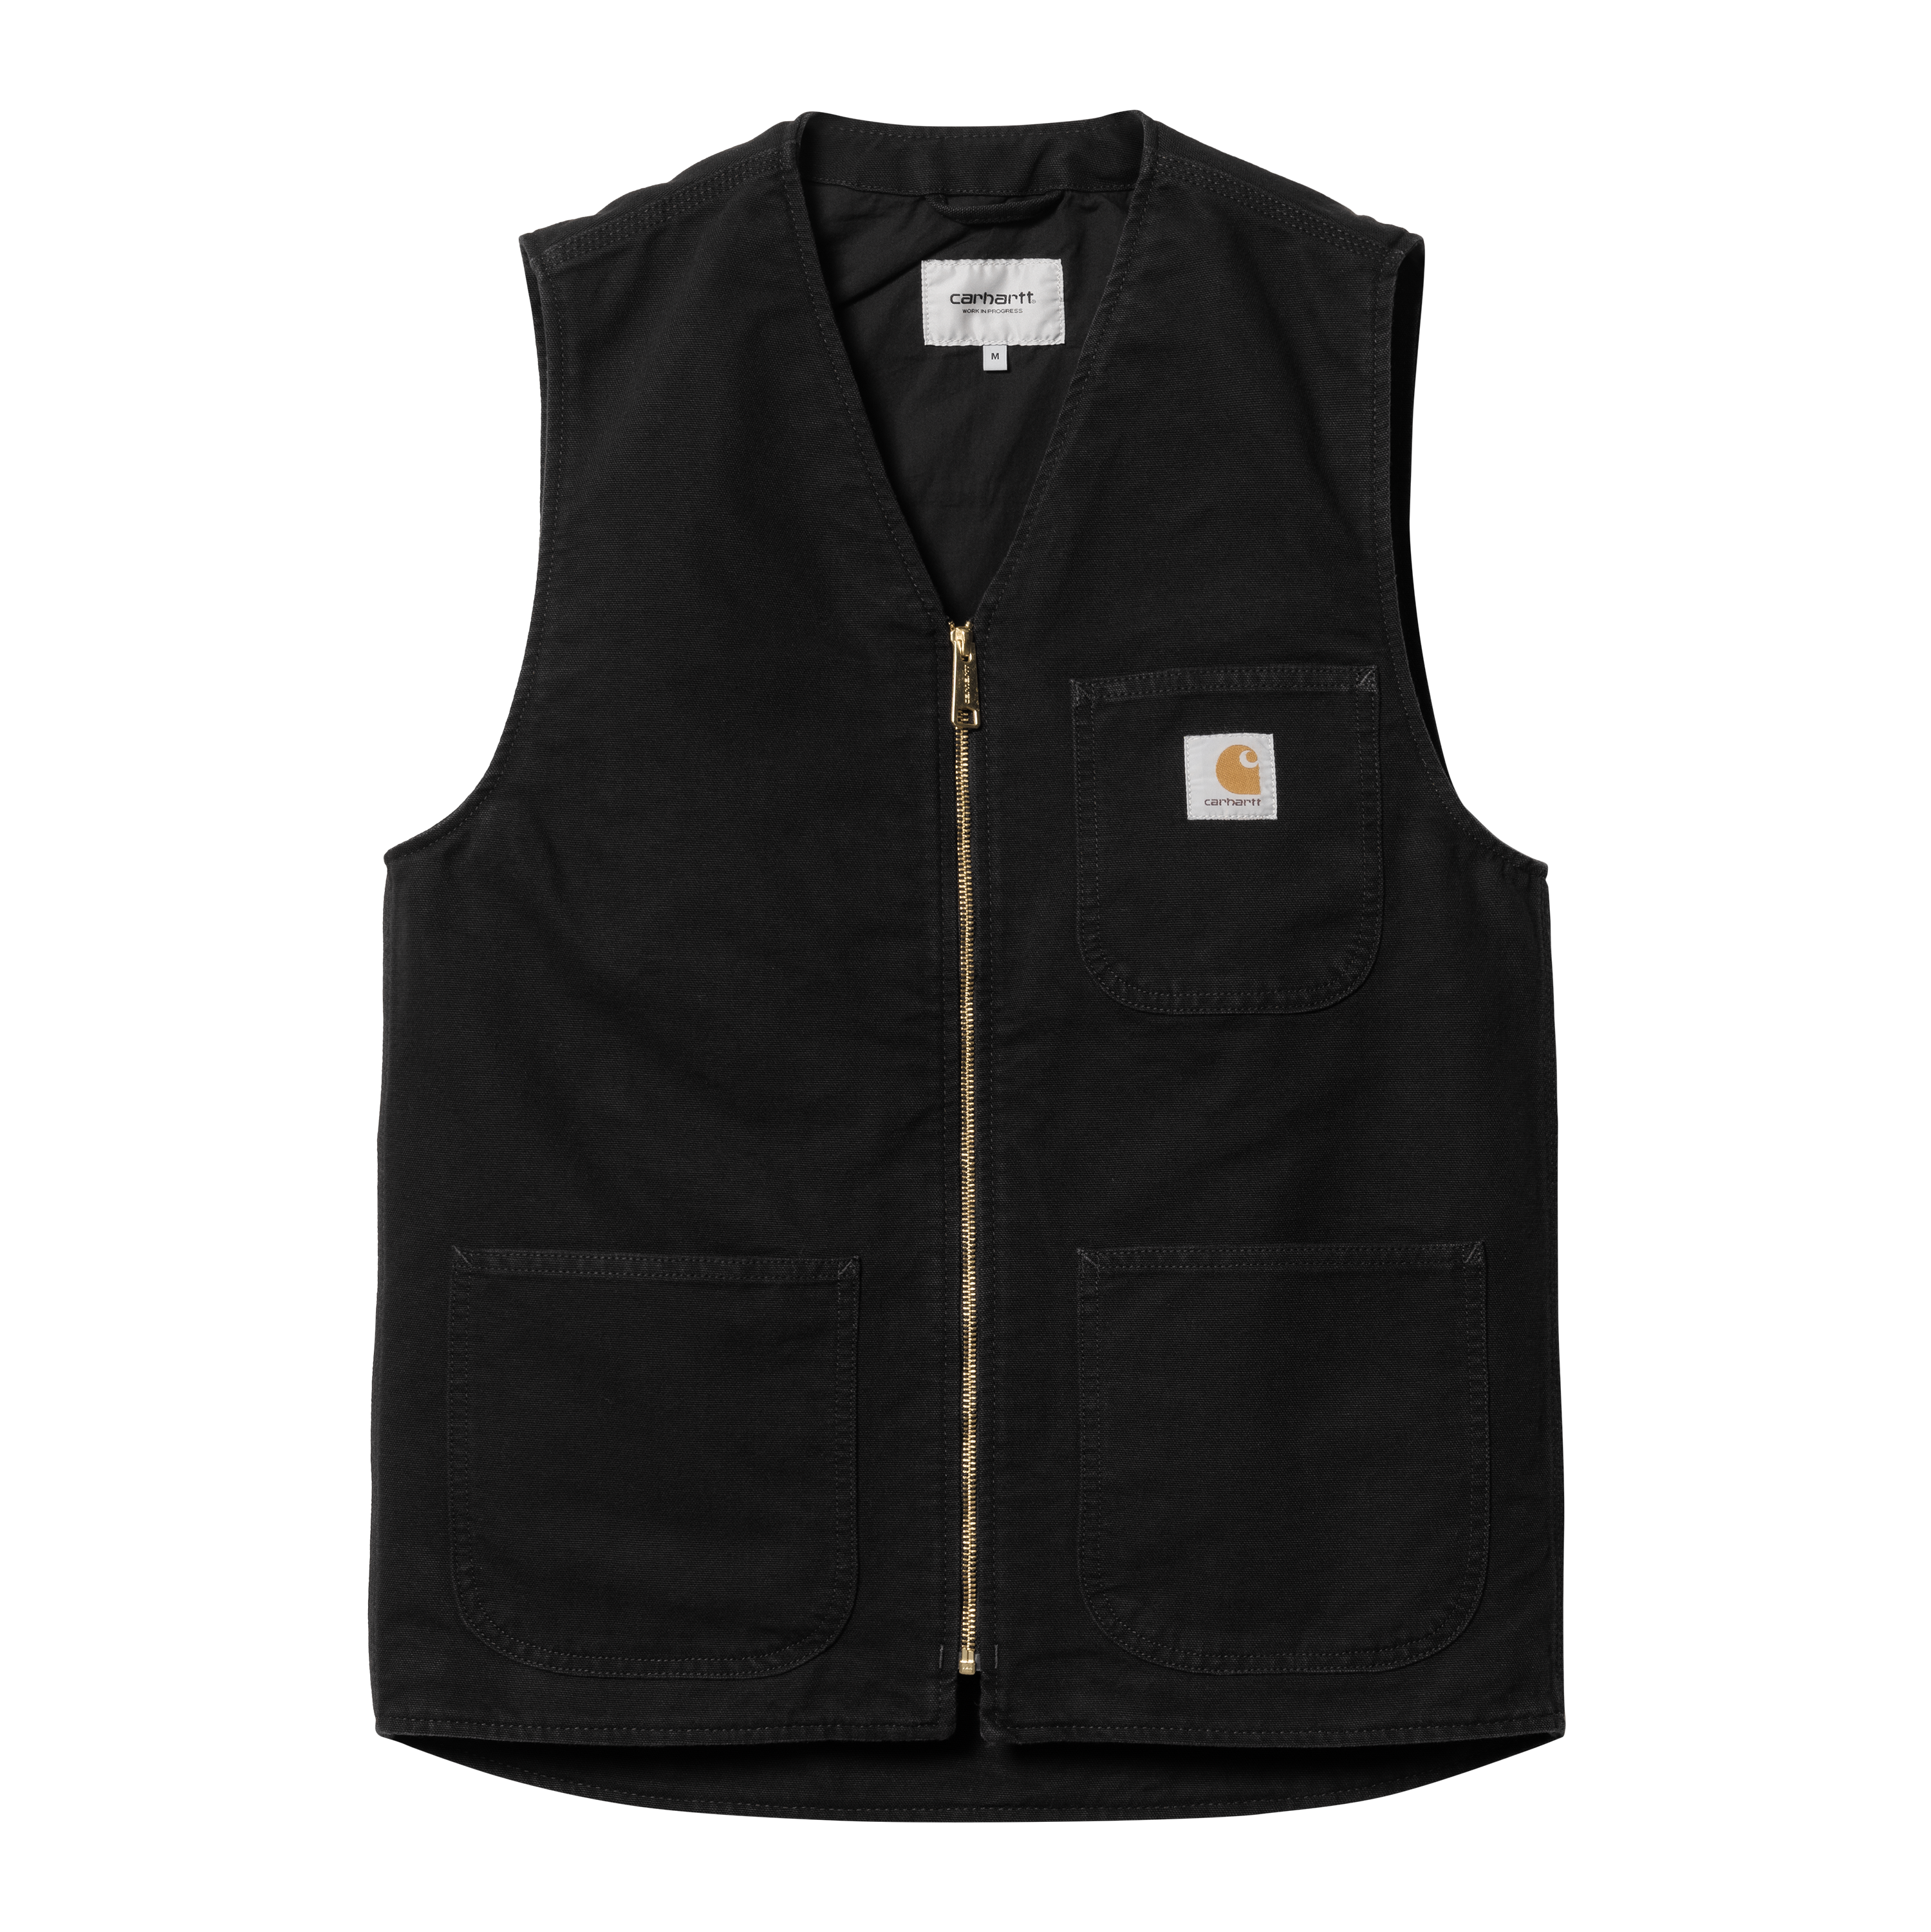 Carhartt WIP Arbor Vest in Black